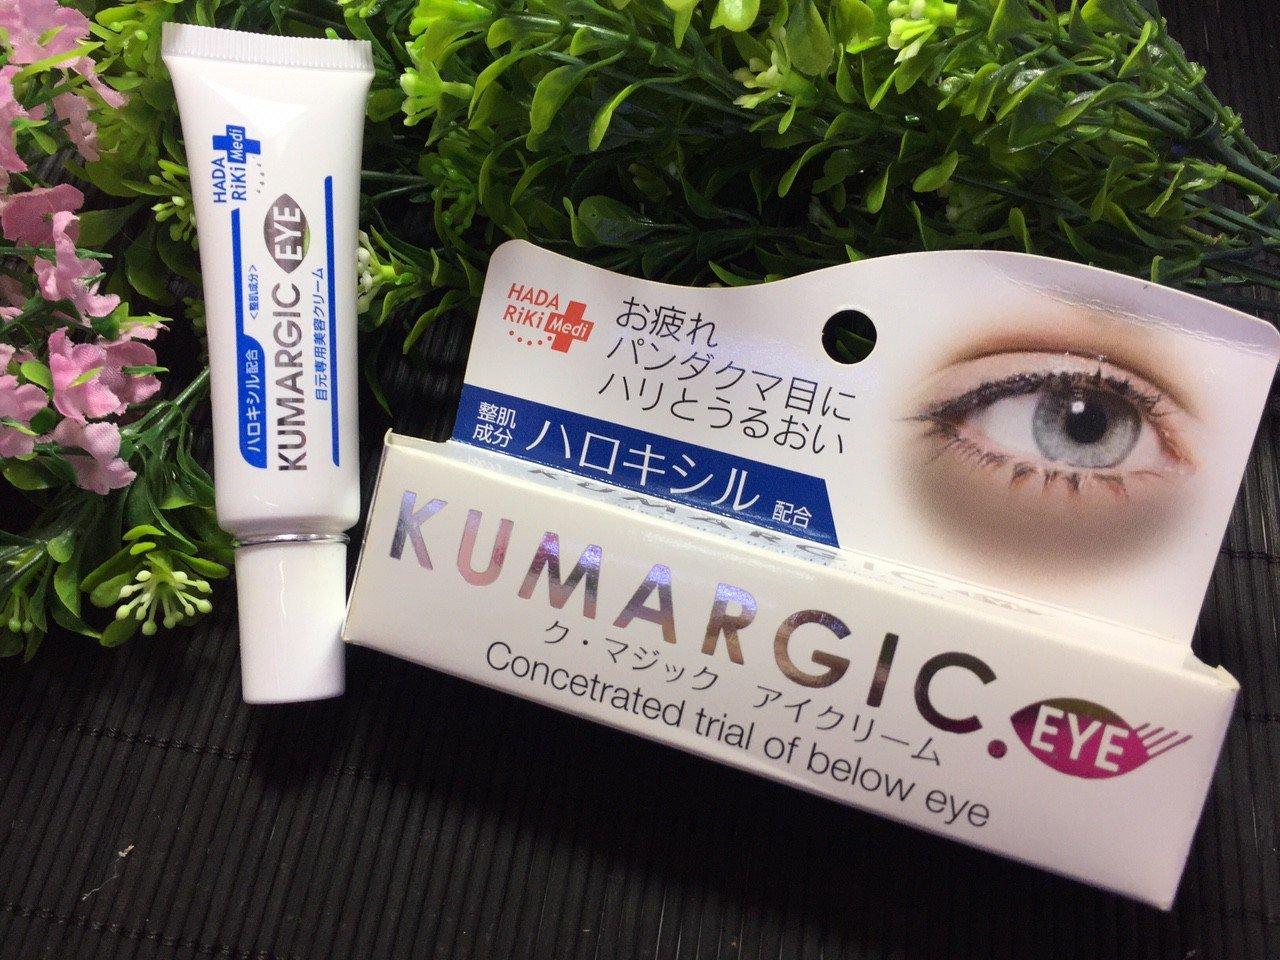 Kem trị thâm quầng mắt Kumargic Eye Cream Nhật Bản (Nguồn: internet)